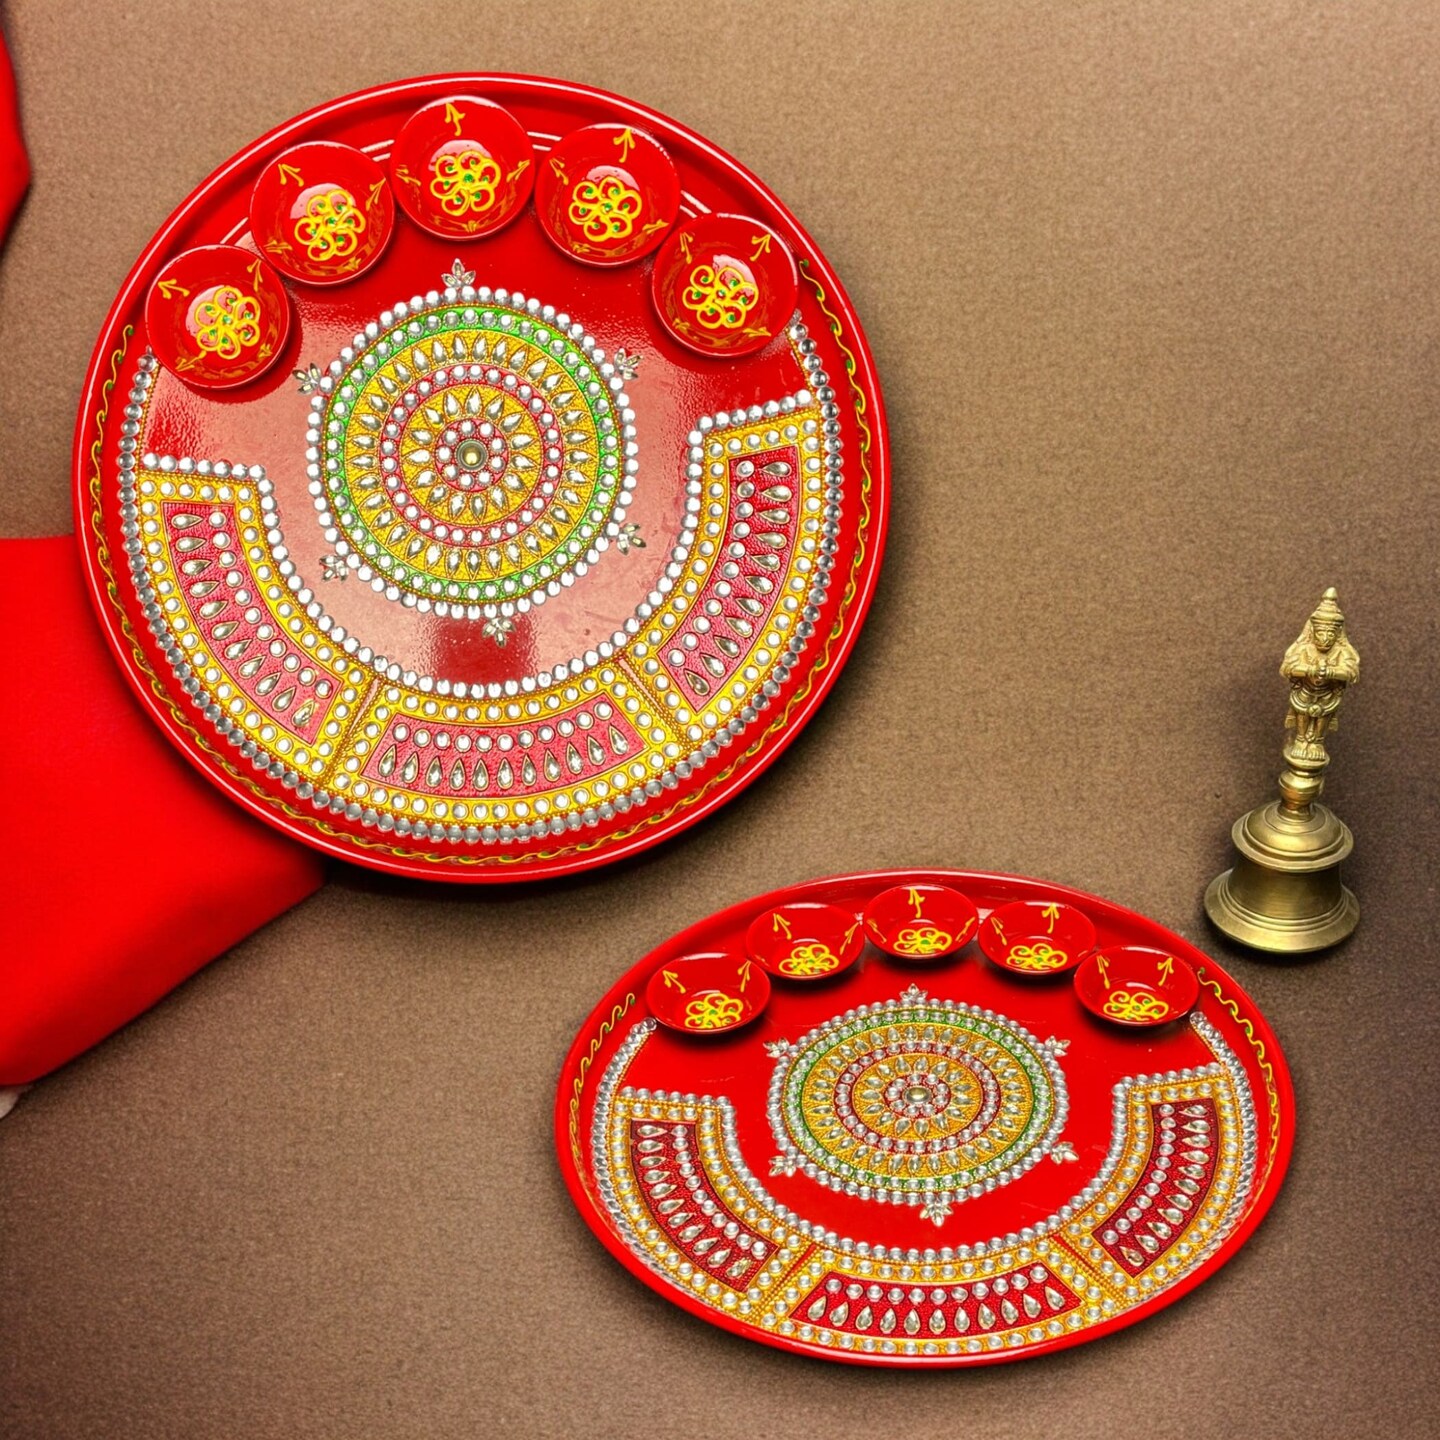 Pooja Thali With 5 Diya Bowls Rhinestone Red Painted Handmade Aarti Rituals Platter Festival Haldi Kumkum Thali Pooja Teej Diwali Wedding Engagement Plate Decorations - Housewarming Gift